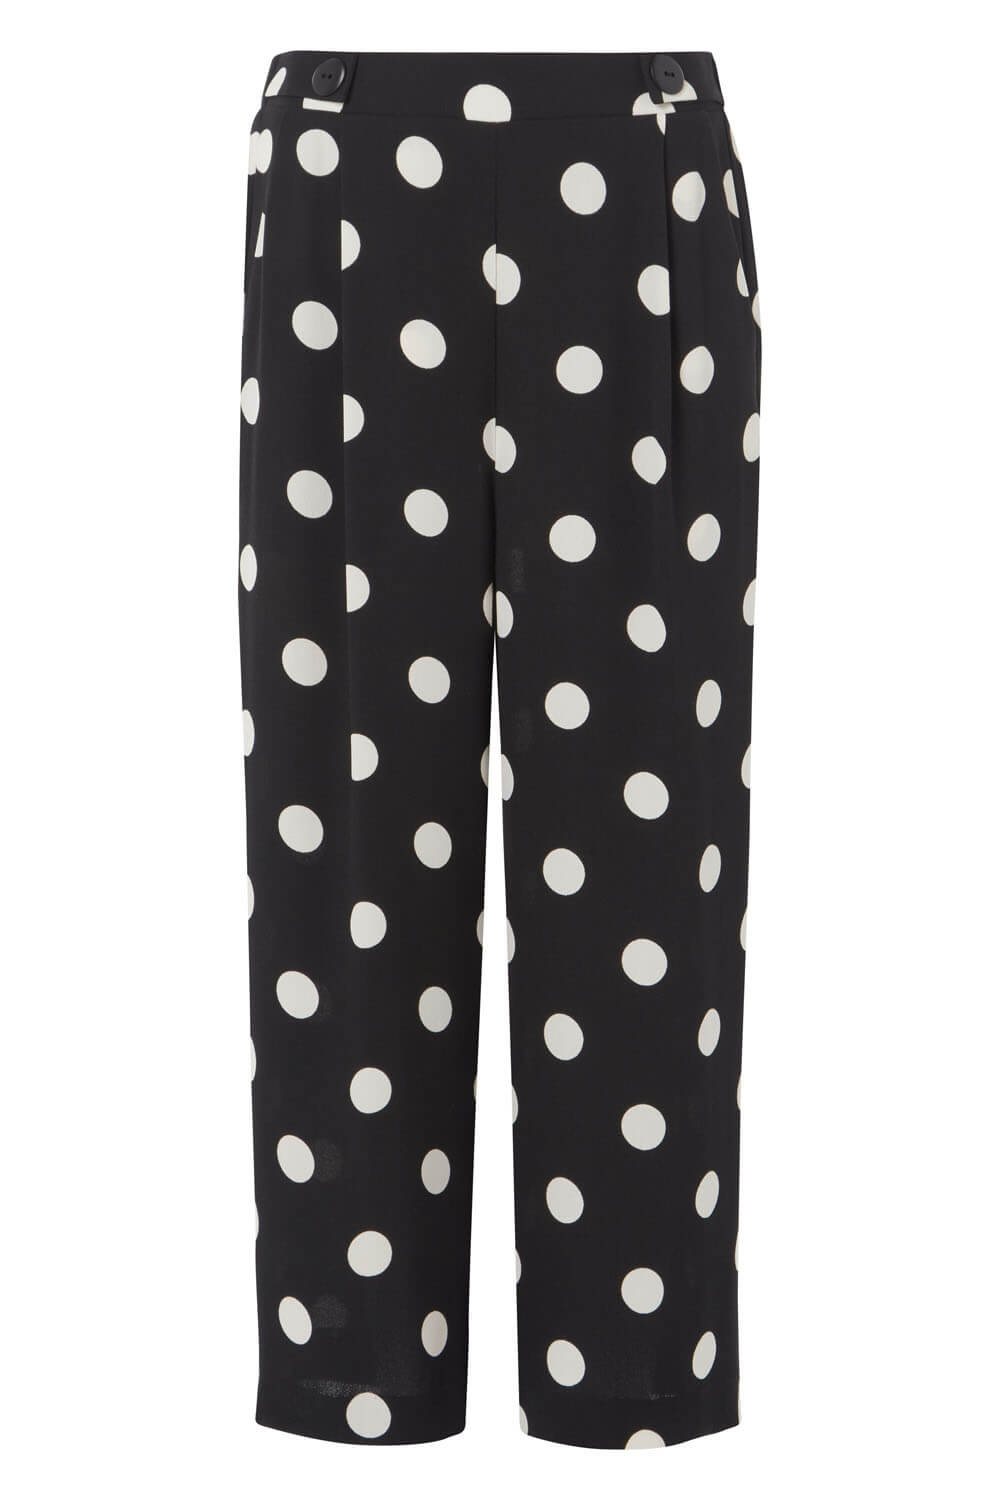 Black Polka Dot Culotte Trousers, Image 5 of 5